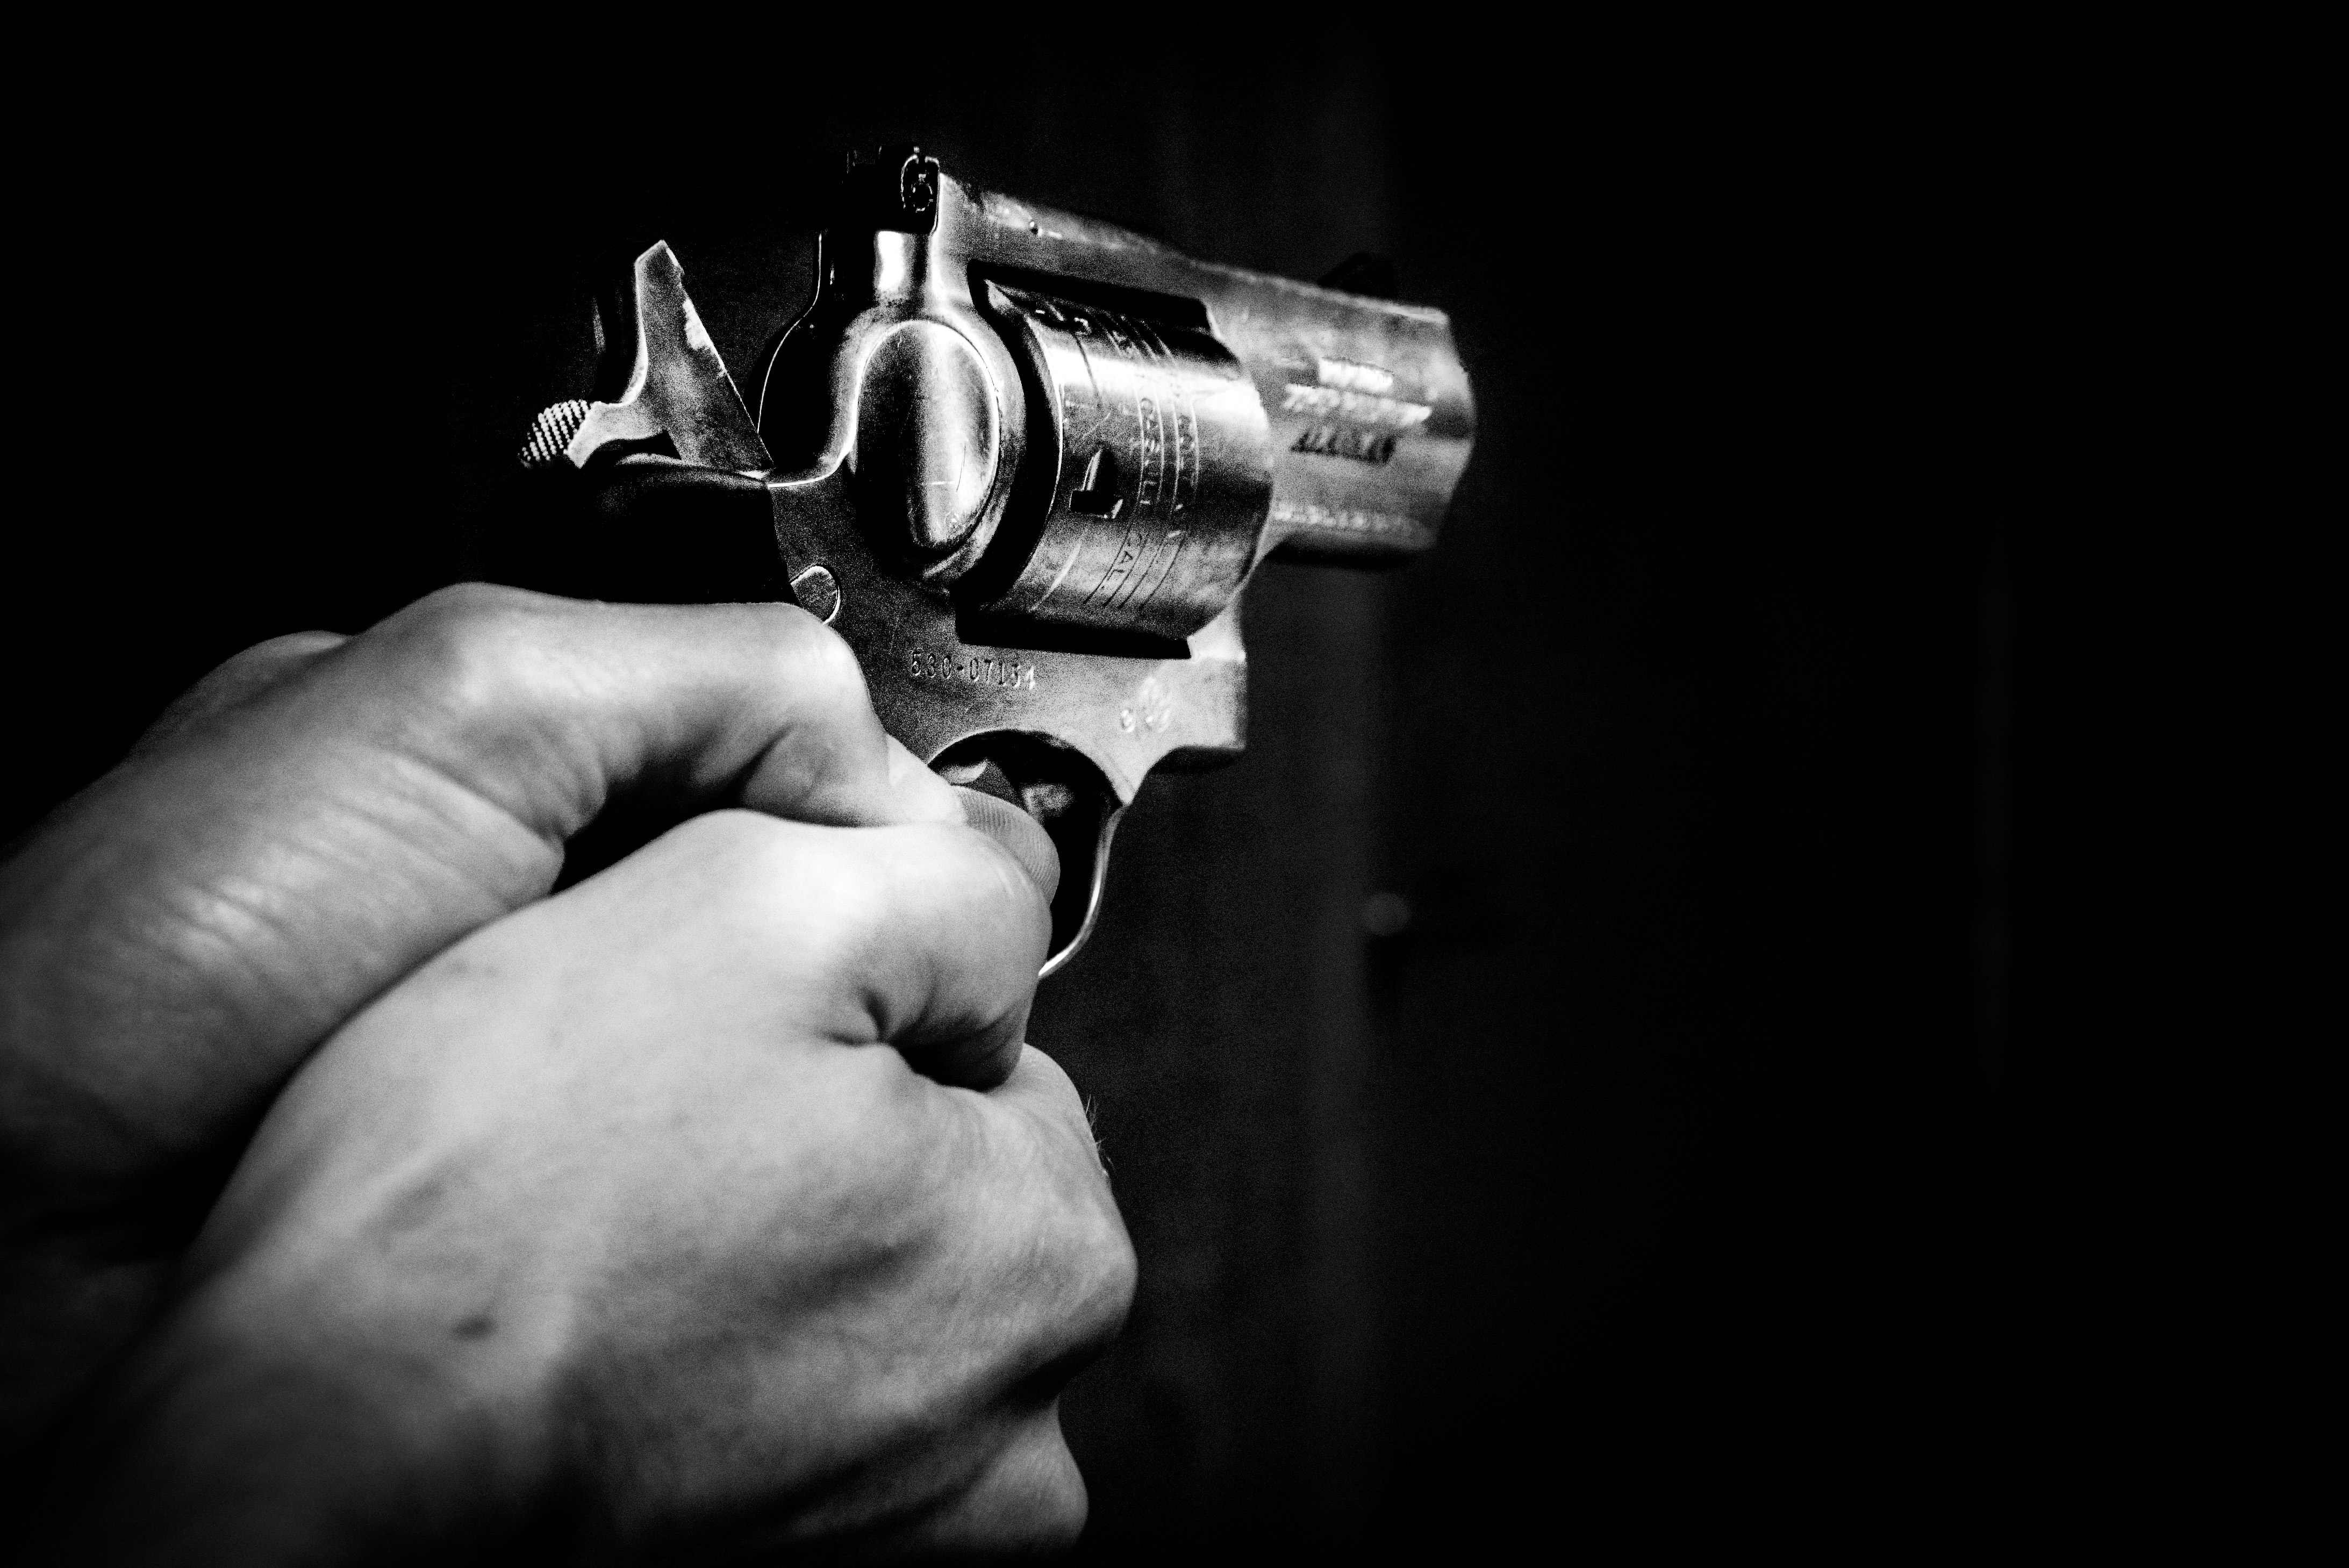 Man shooting revolver gun image - Free stock photo - Public Domain ...